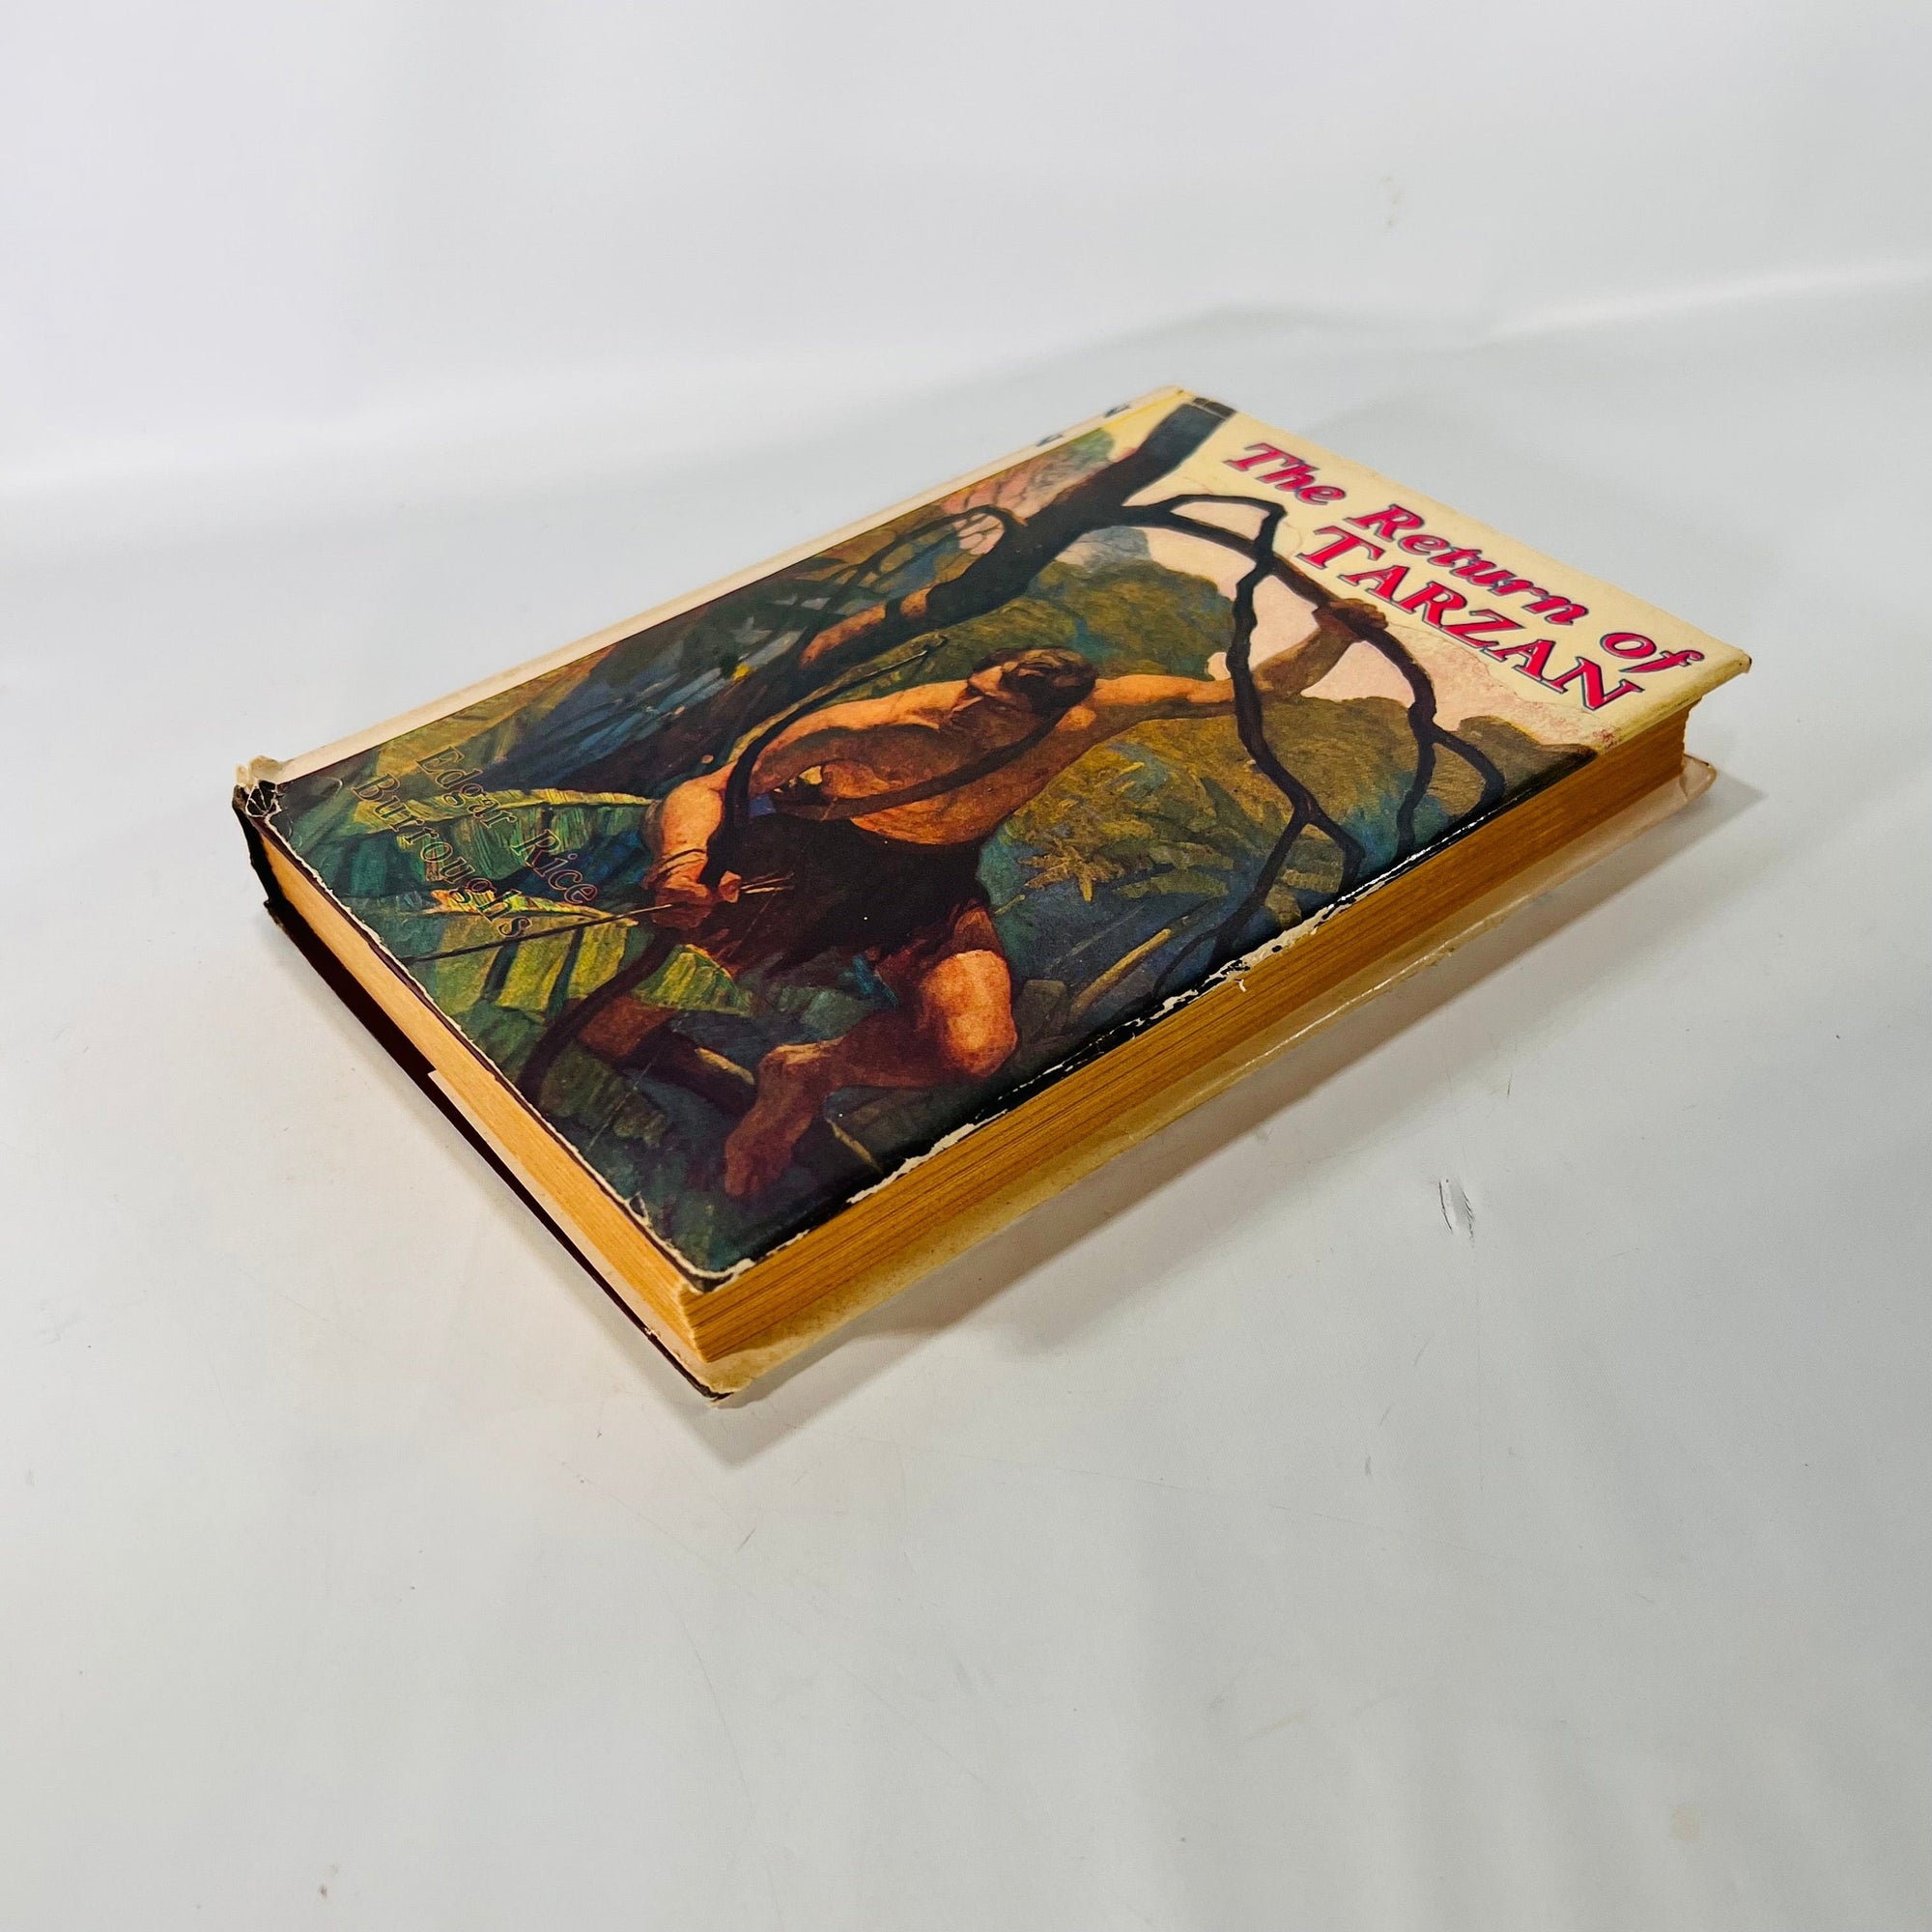 The Return of Tarzan by Edgar Rice Burroughs 1915 Grosset & Dunlap Vintage Book